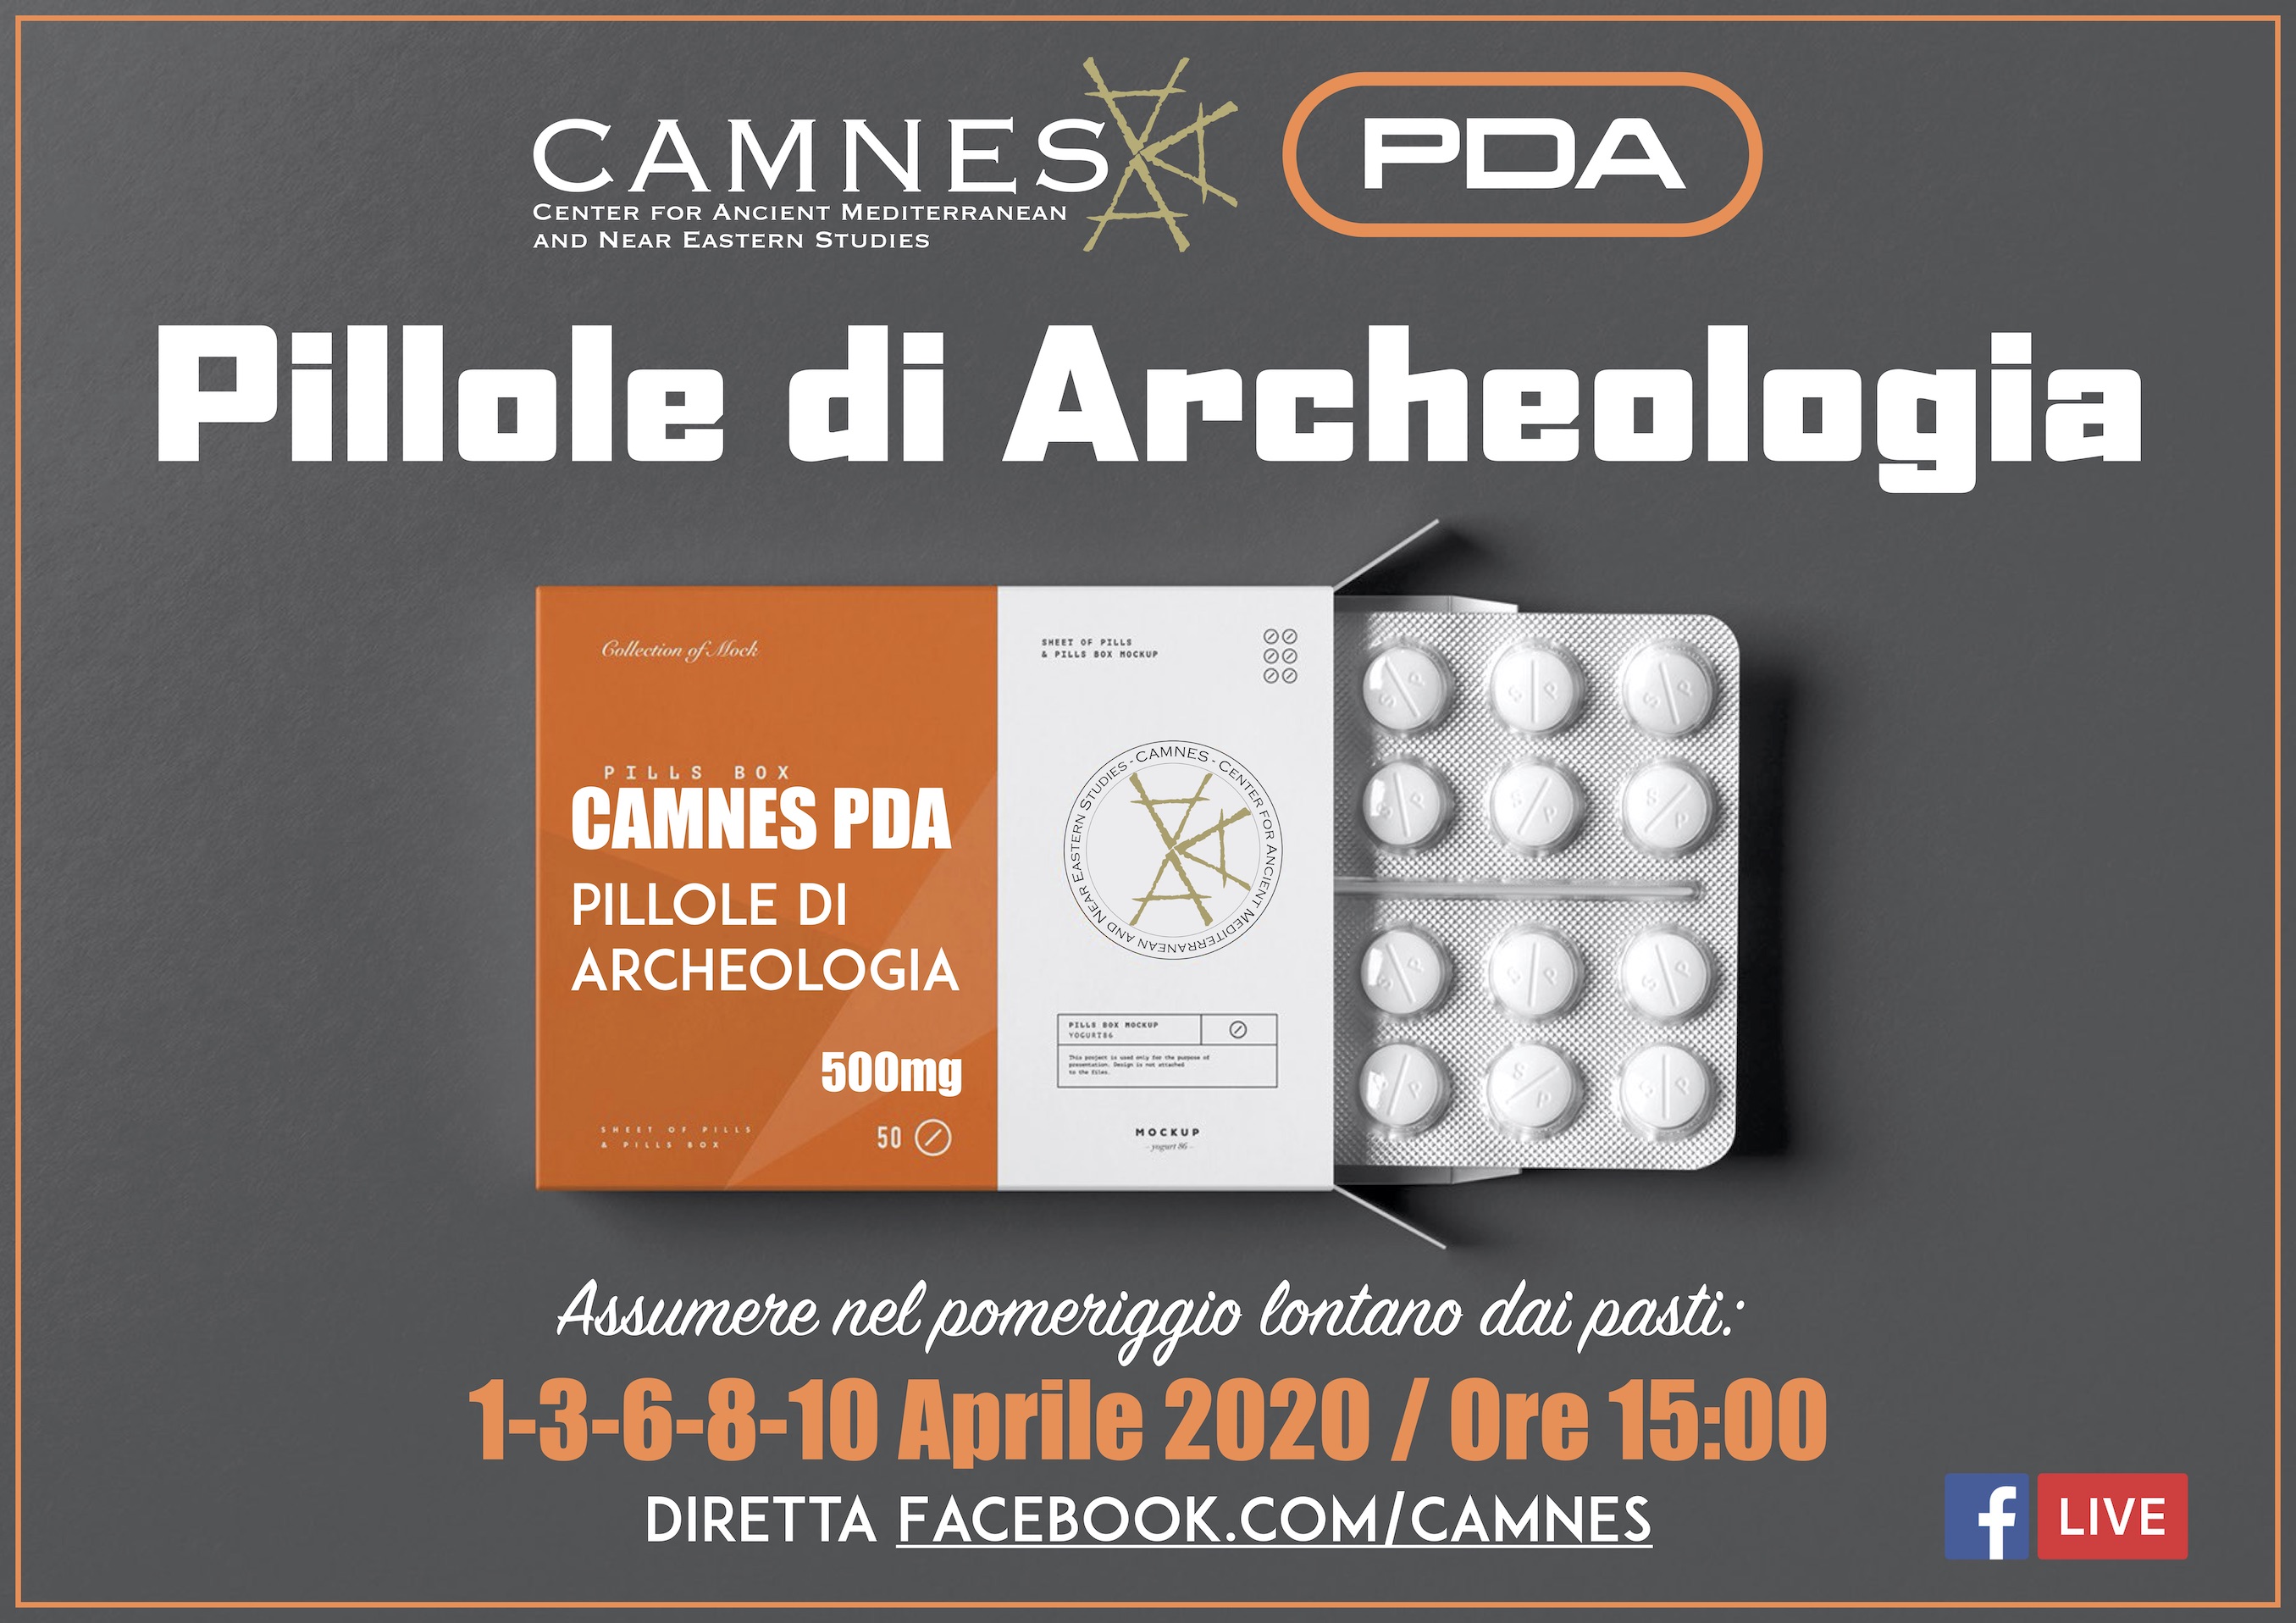 CAMNES - PDA: Pillole di Archeologia